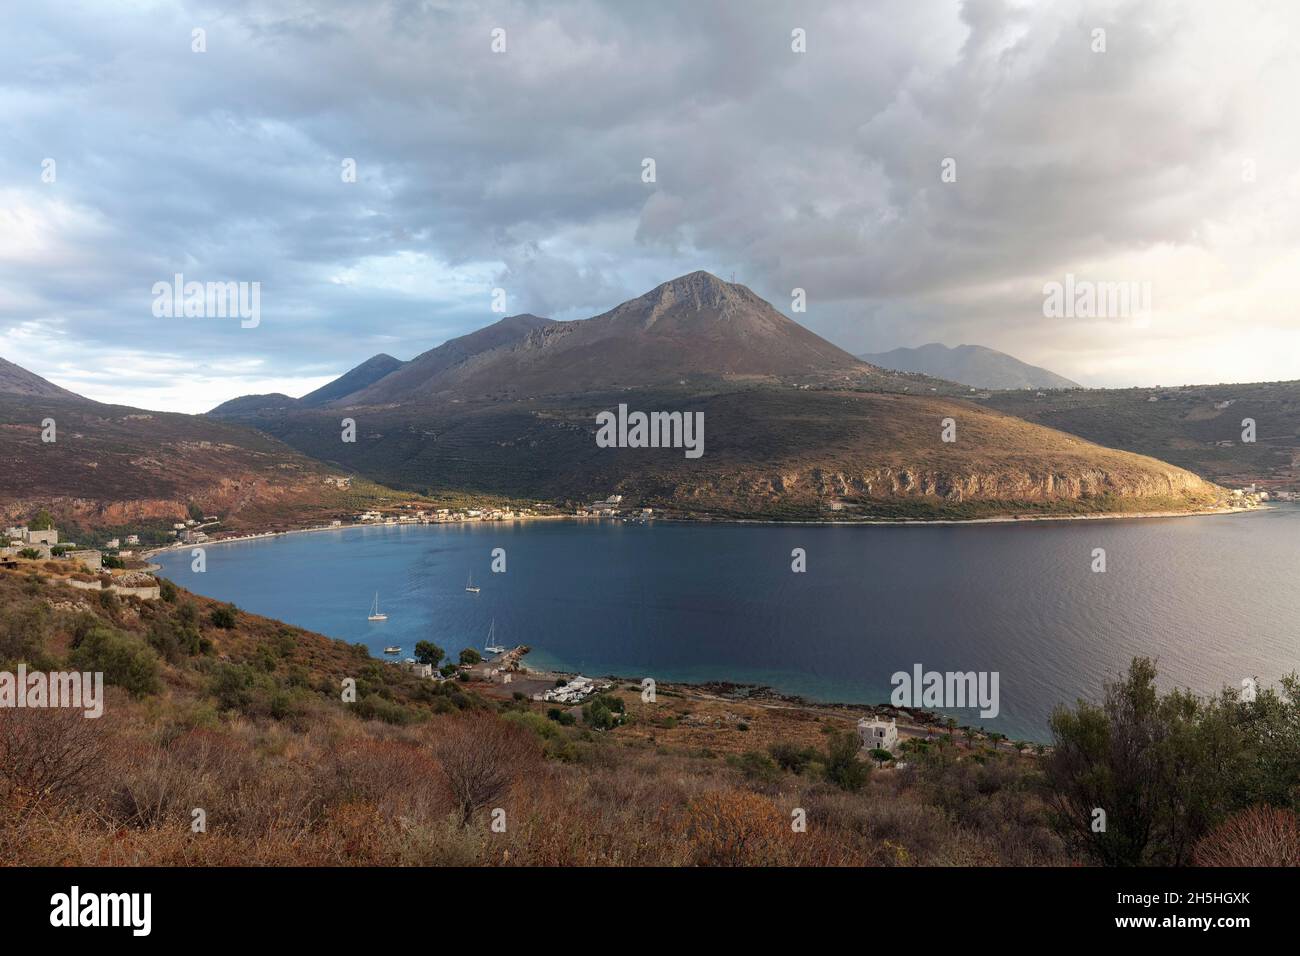 Limeni Bay near Neo Itylo, Taygetos Mountains, Mani Peninsula, Laconia, Peloponnese, Greece Stock Photo